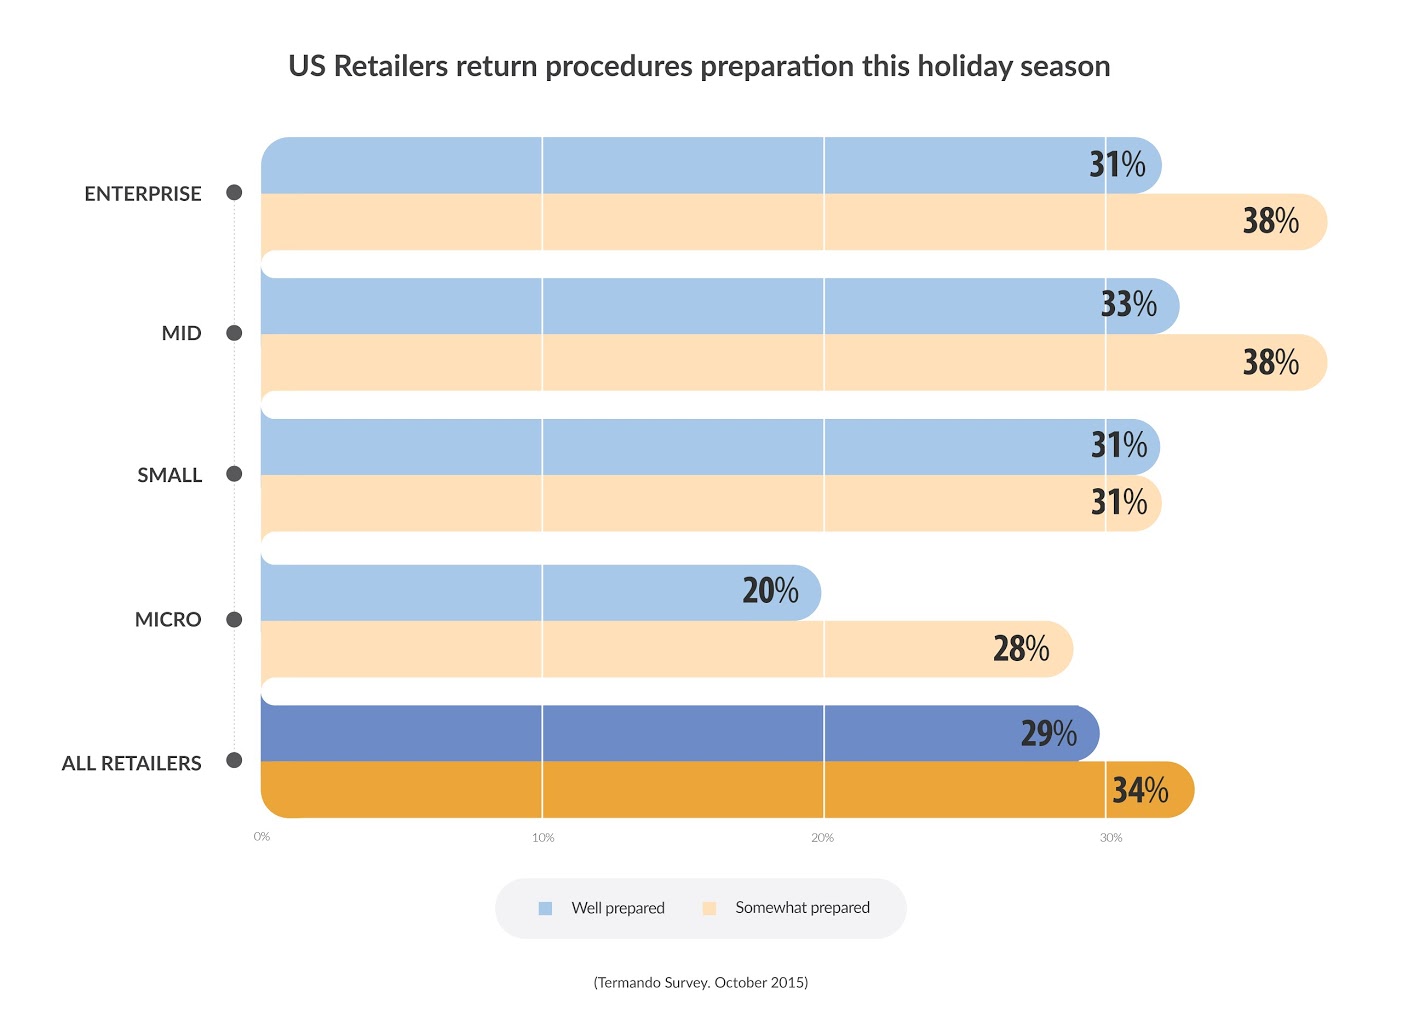 U.S. retailers' preparation for returns